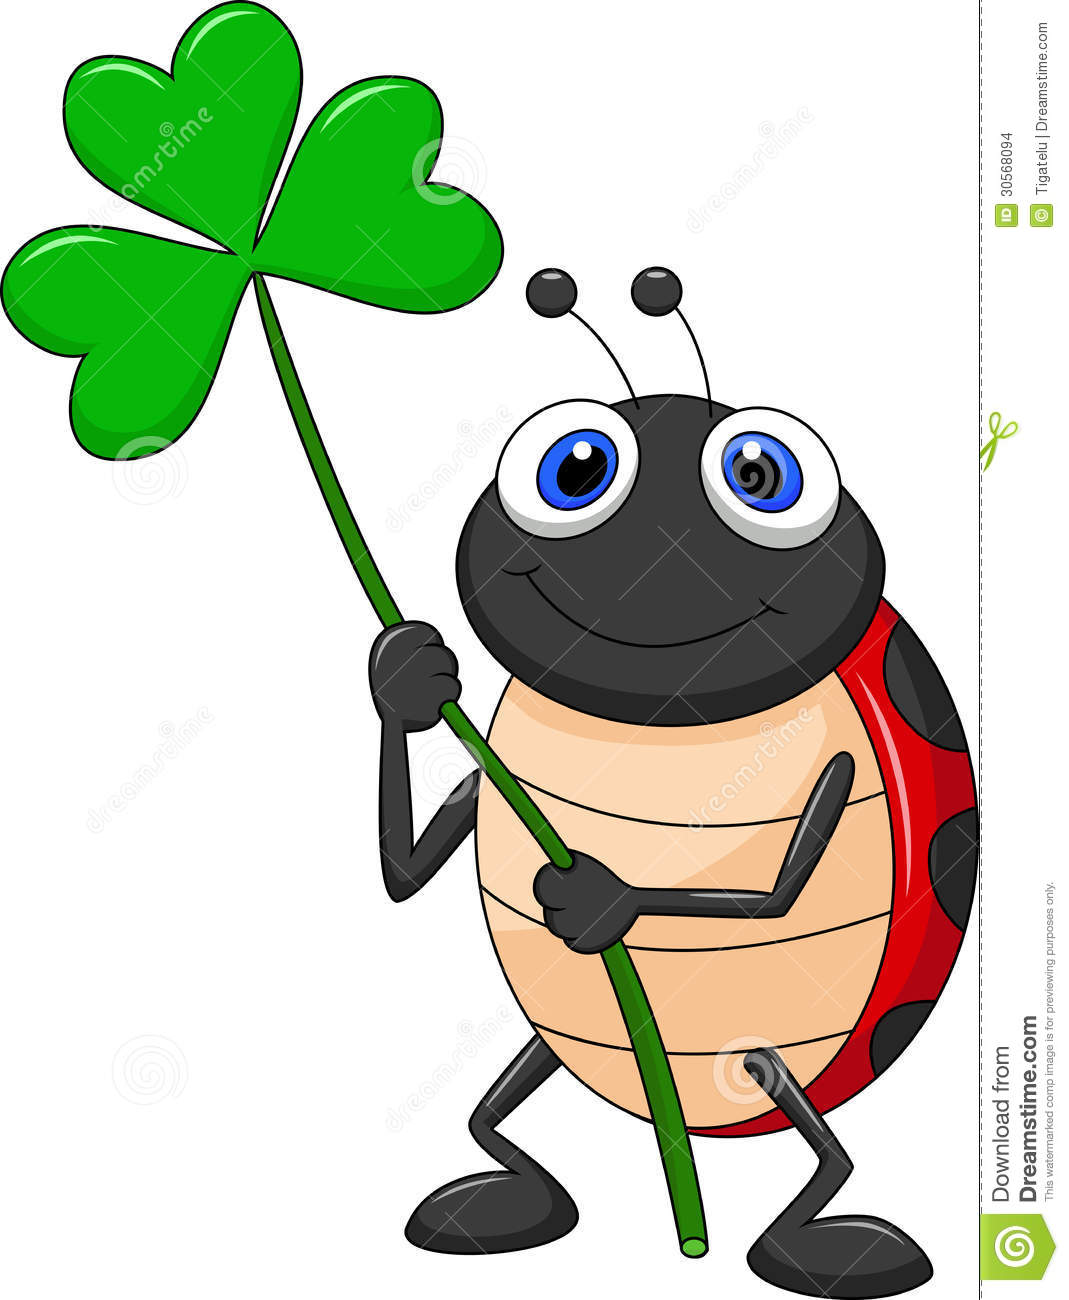 Cute Ladybug Cartoon With Clover Leaf Stock Images   Image  30568094